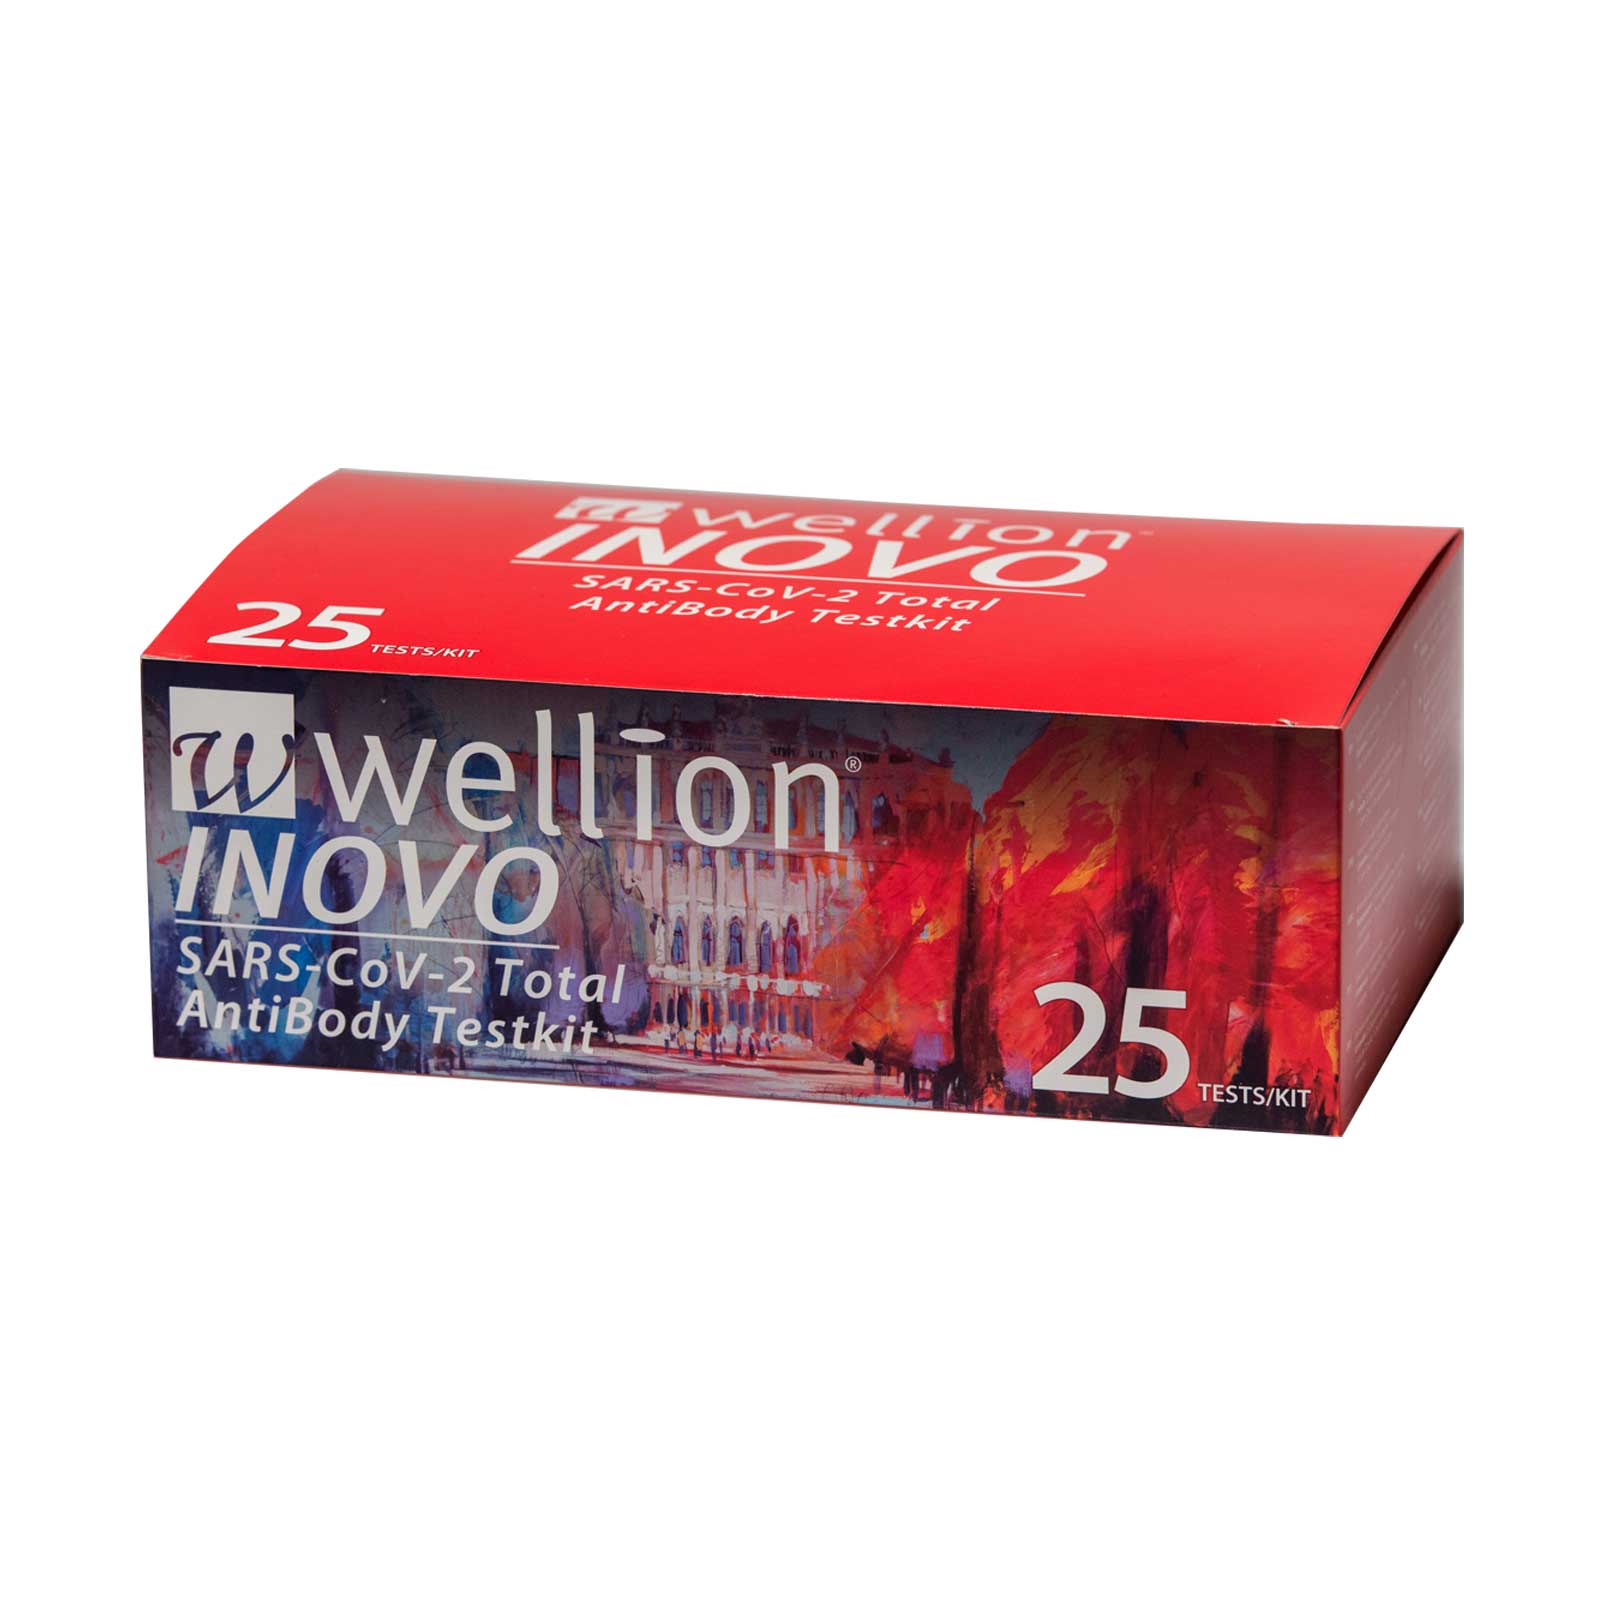 Wellion INOVO Total AntiBody Testkit 25ct